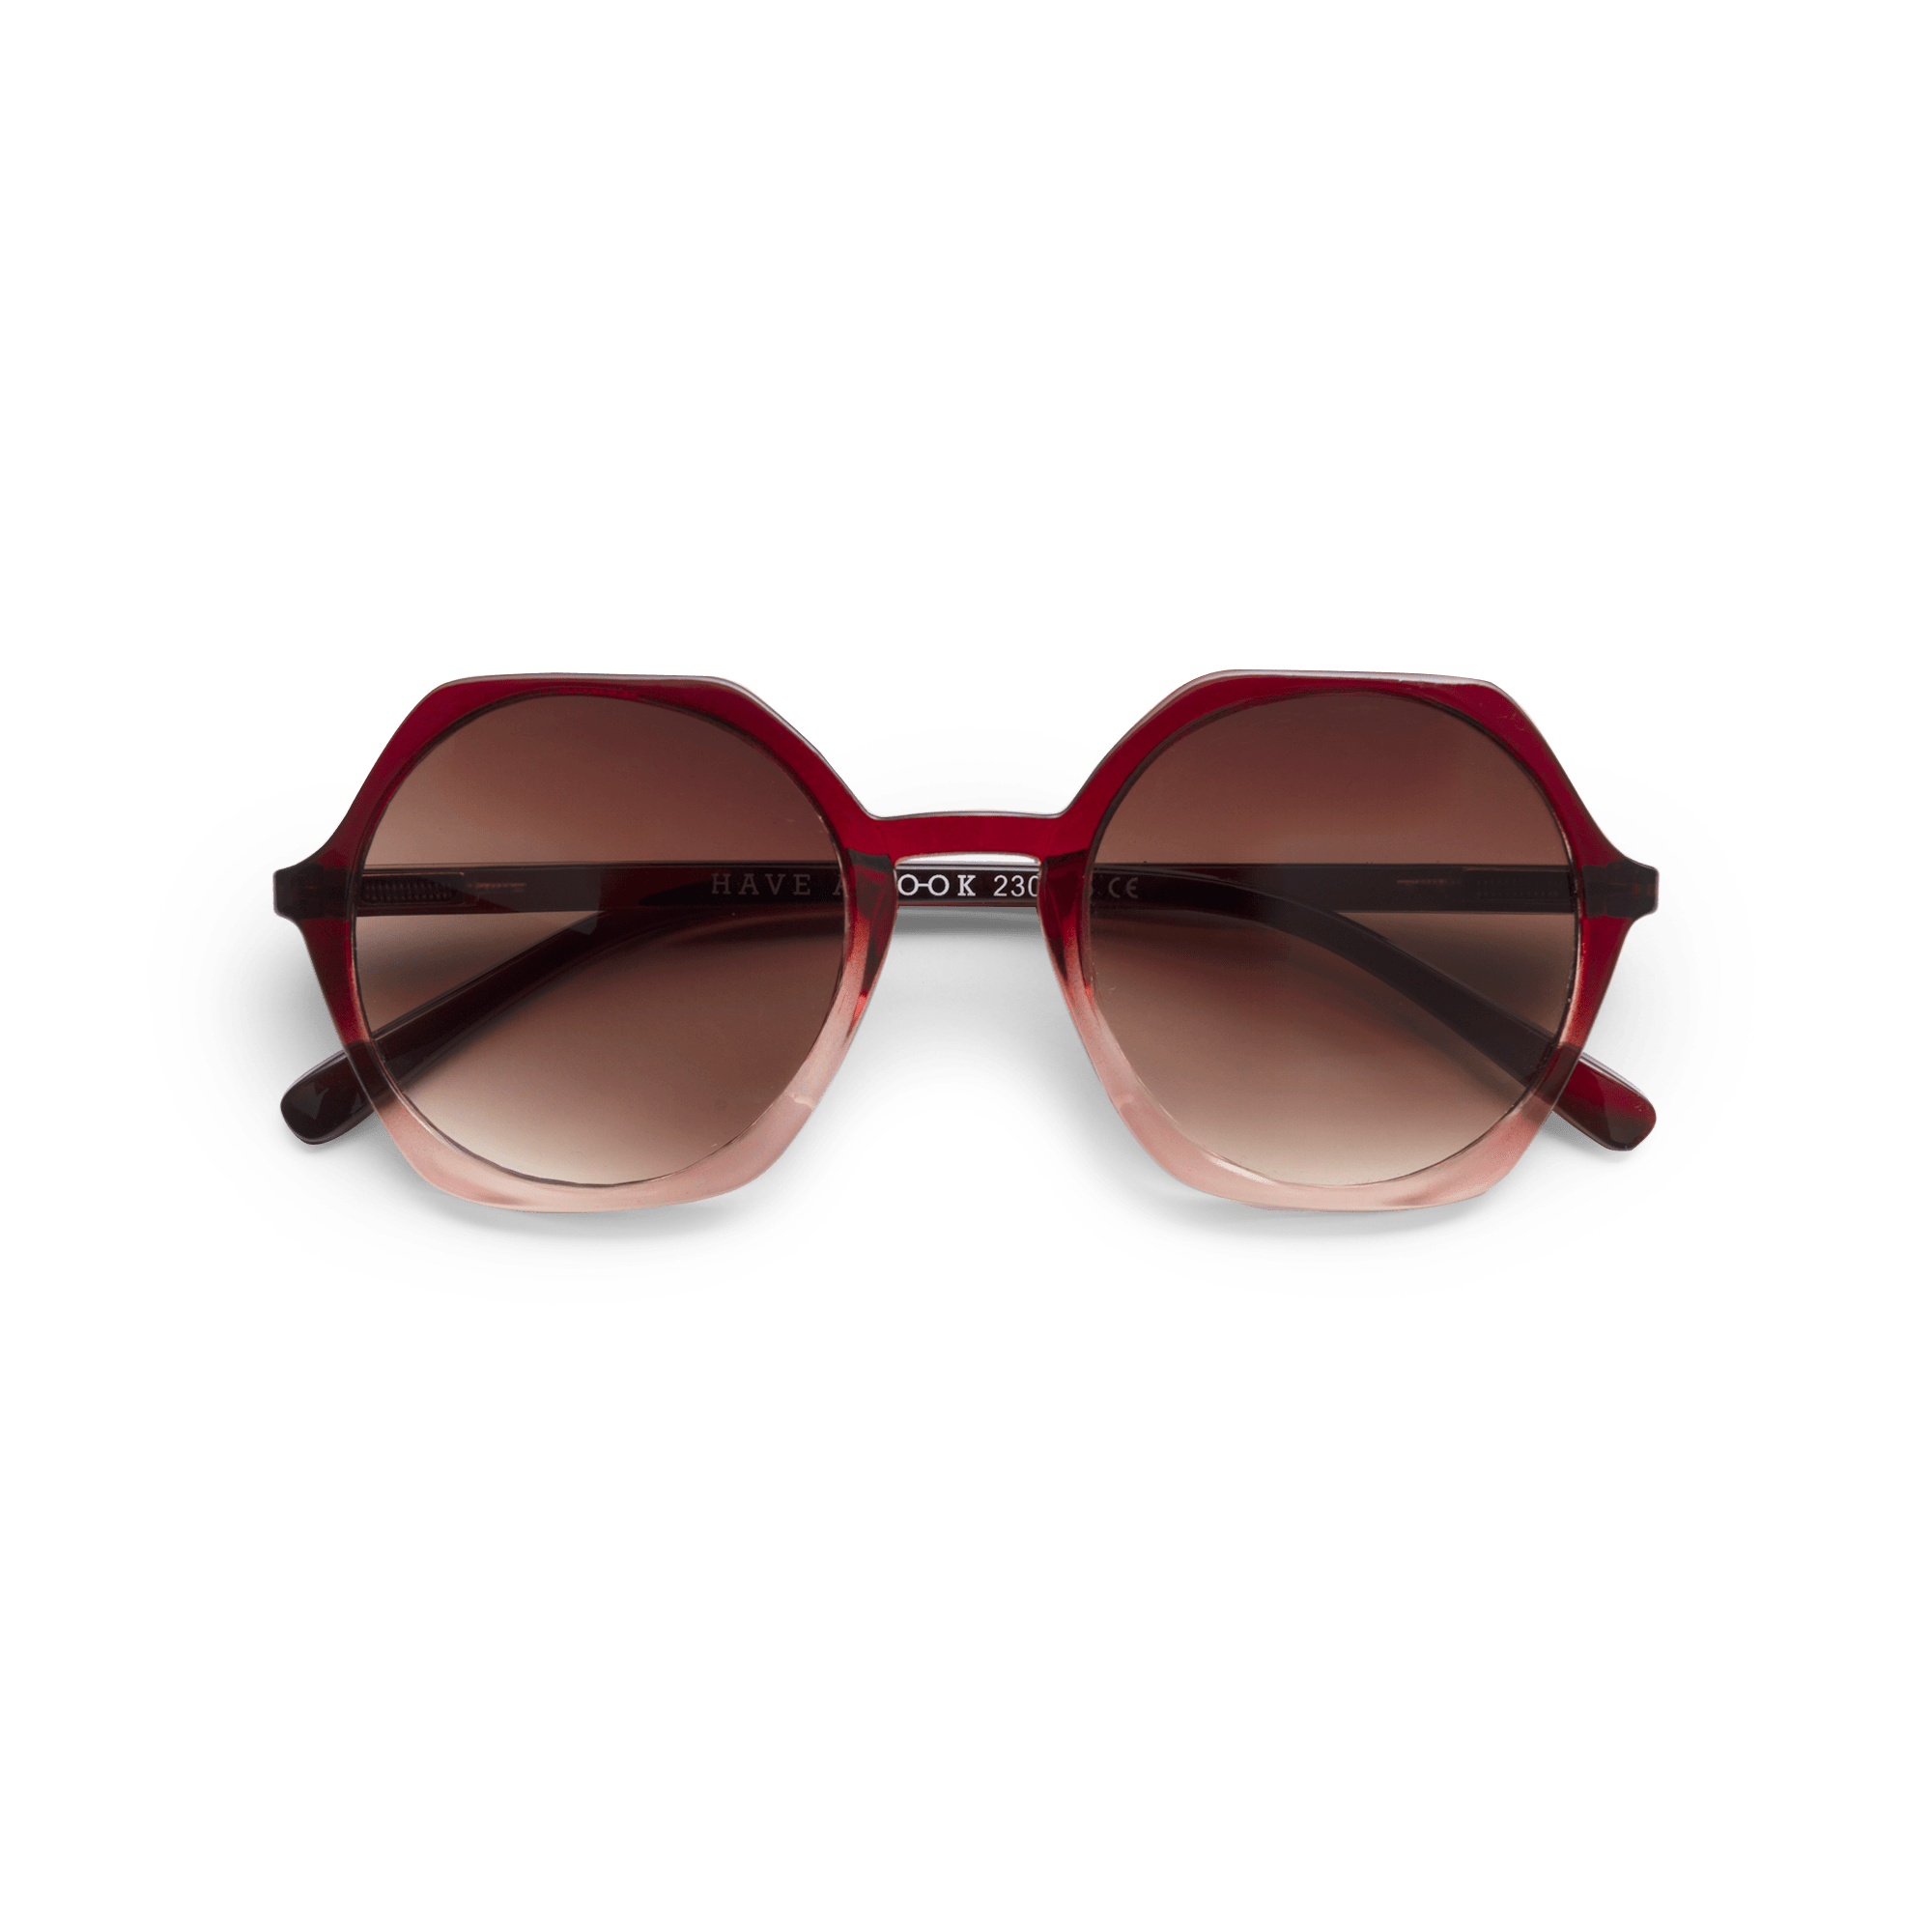 Sonnenbrillen Edgy - ruby aus Have A Look